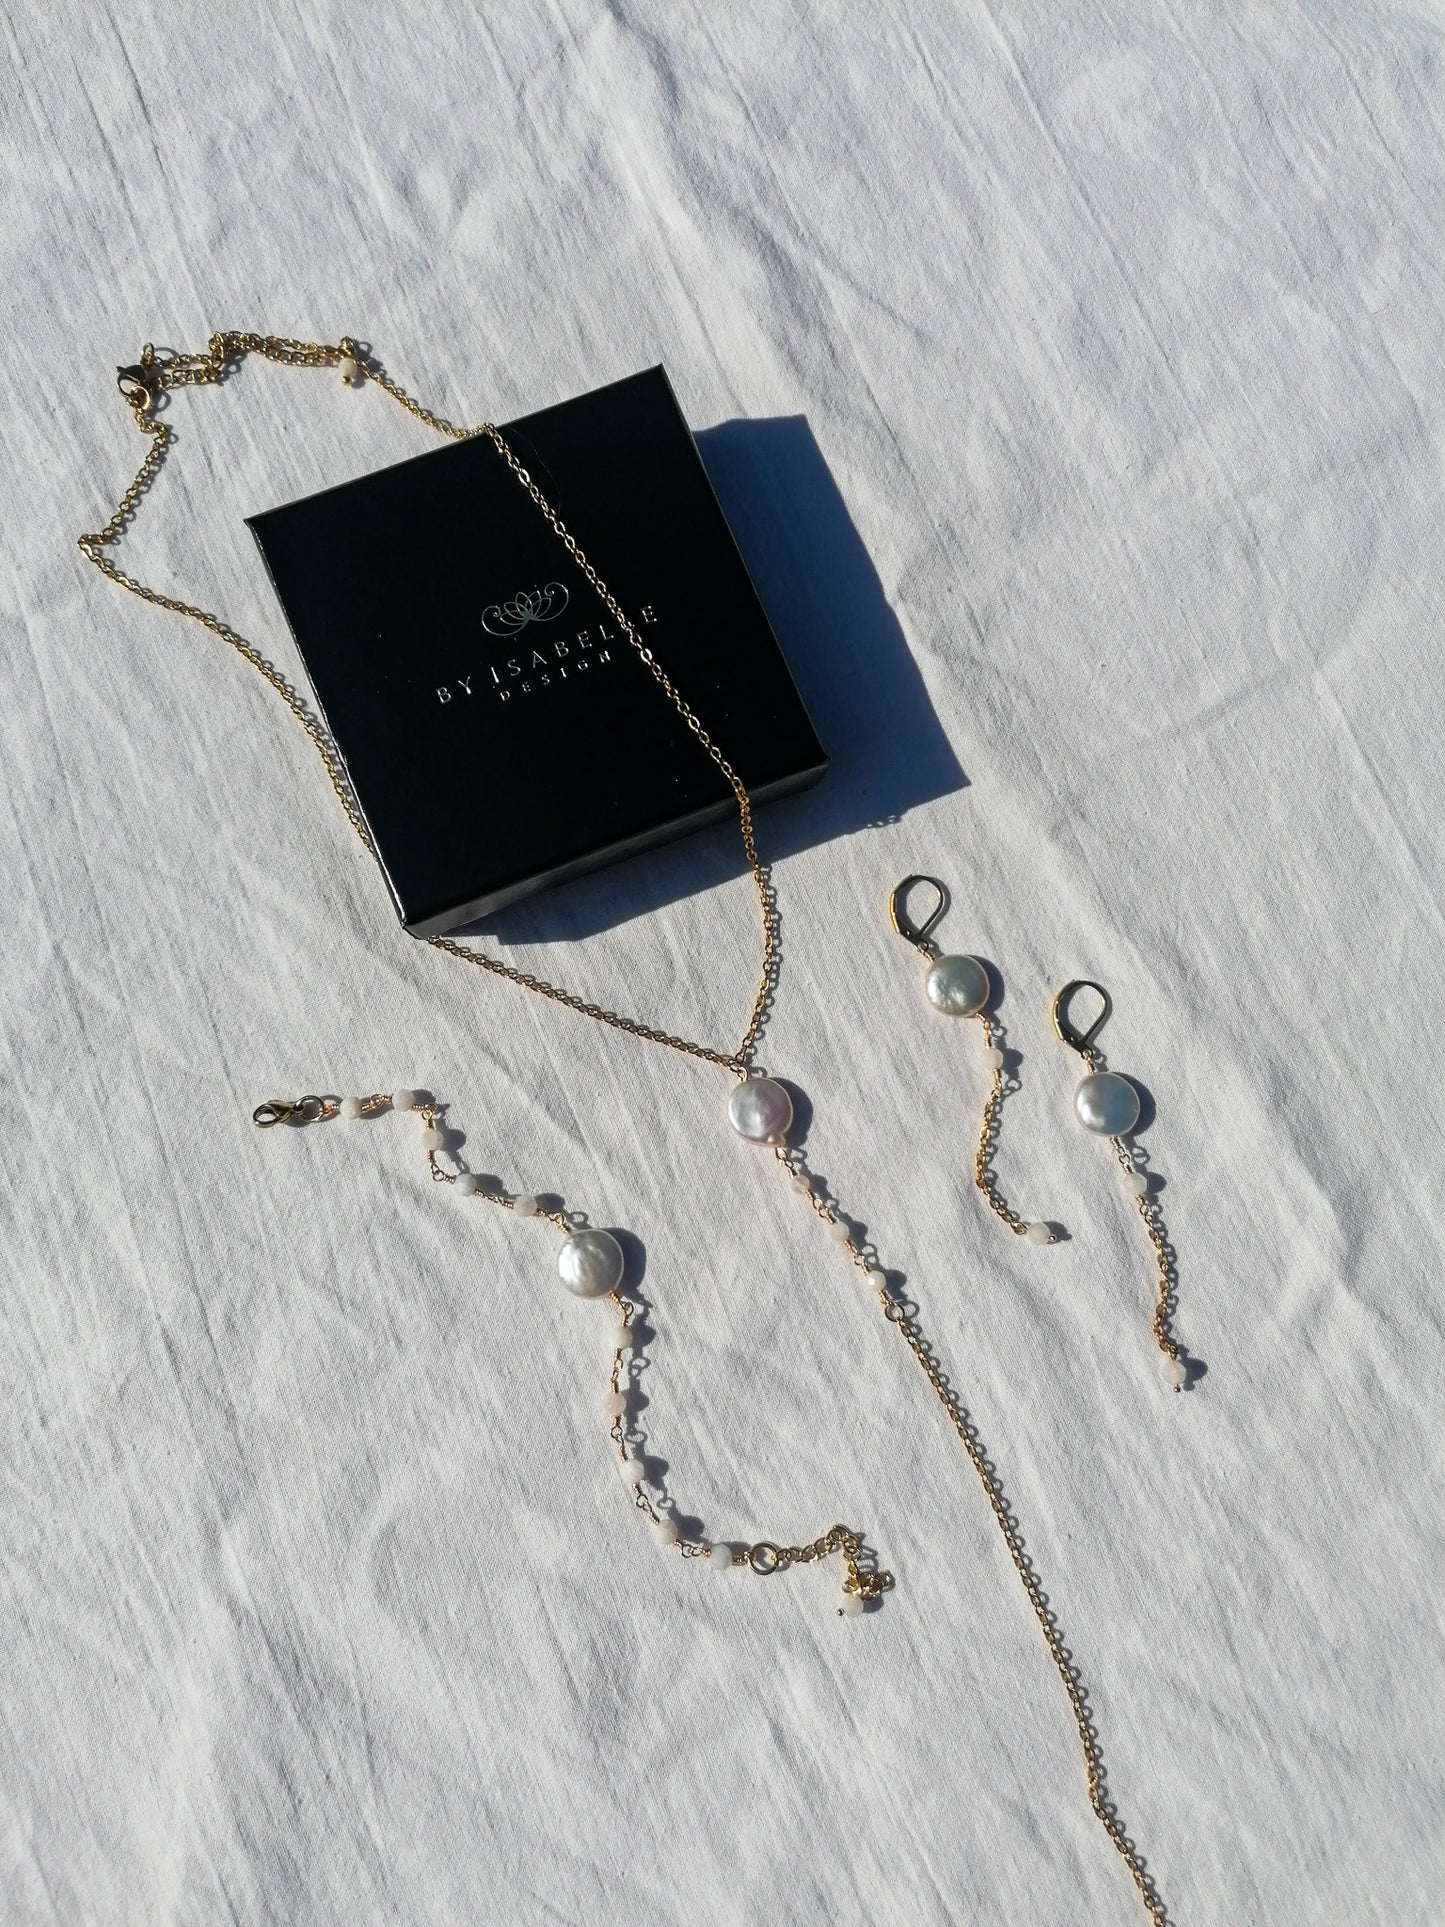 Ciara jewelry set